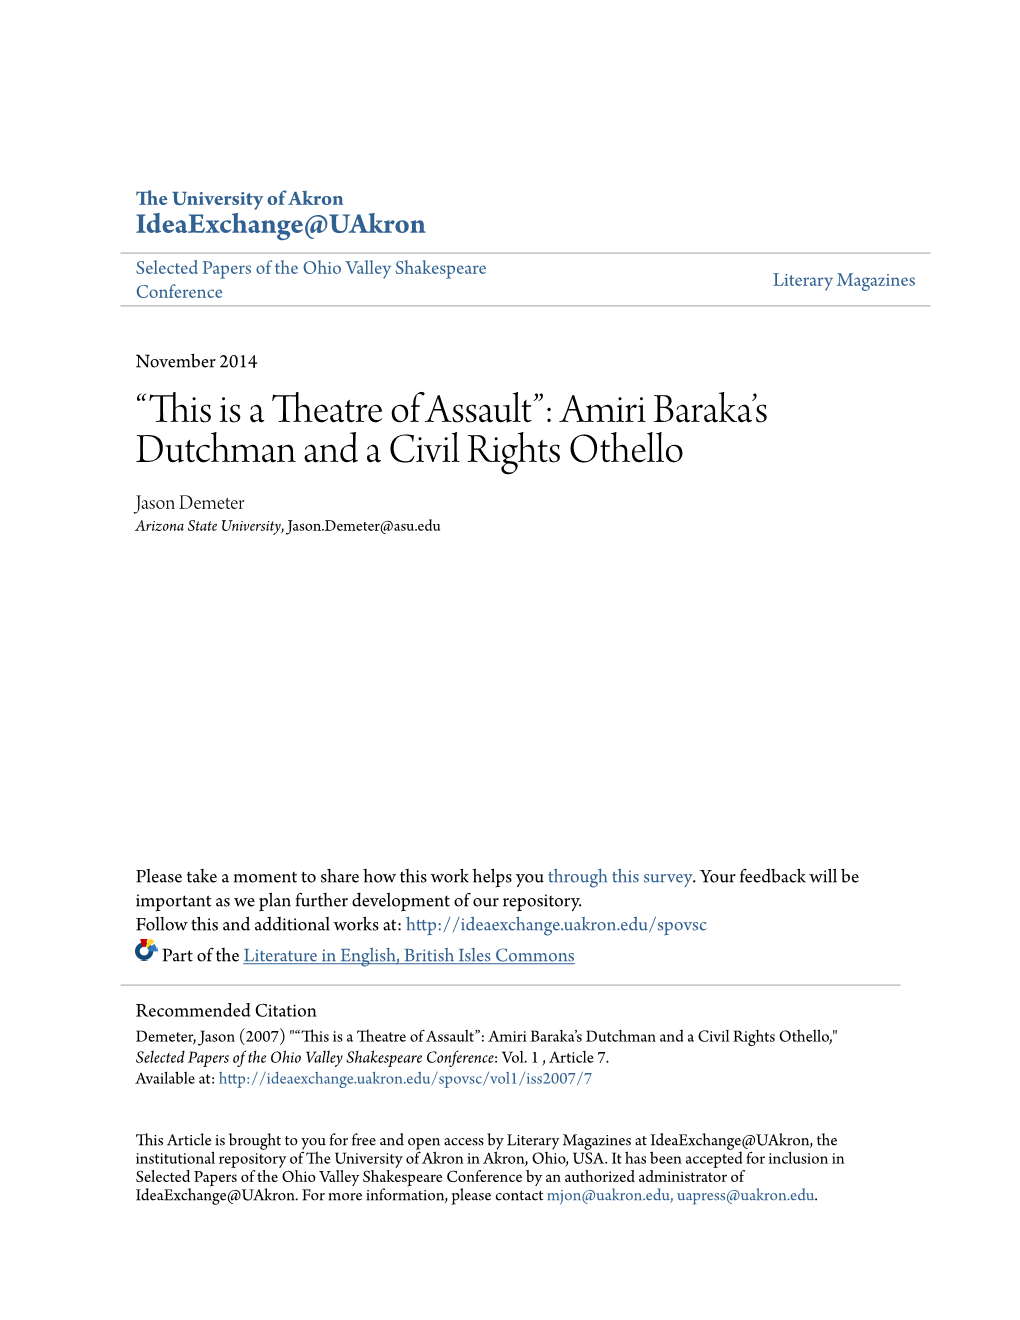 “This Is a Theatre of Assault”: Amiri Baraka's Dutchman and a Civil